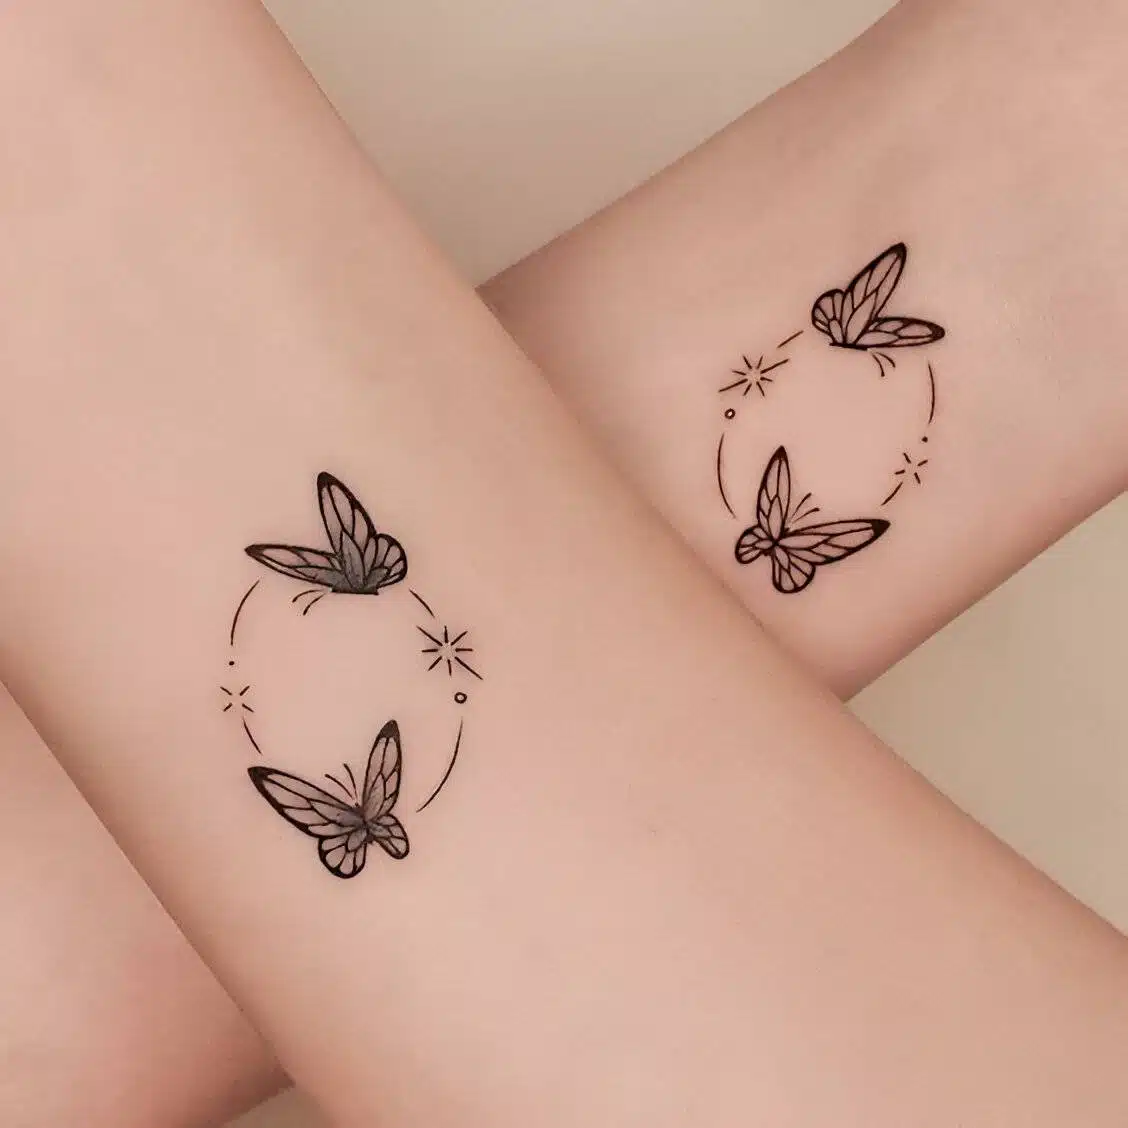 25 Feminine Tattoo Ideas That Are Small But Oh So Pretty - 163